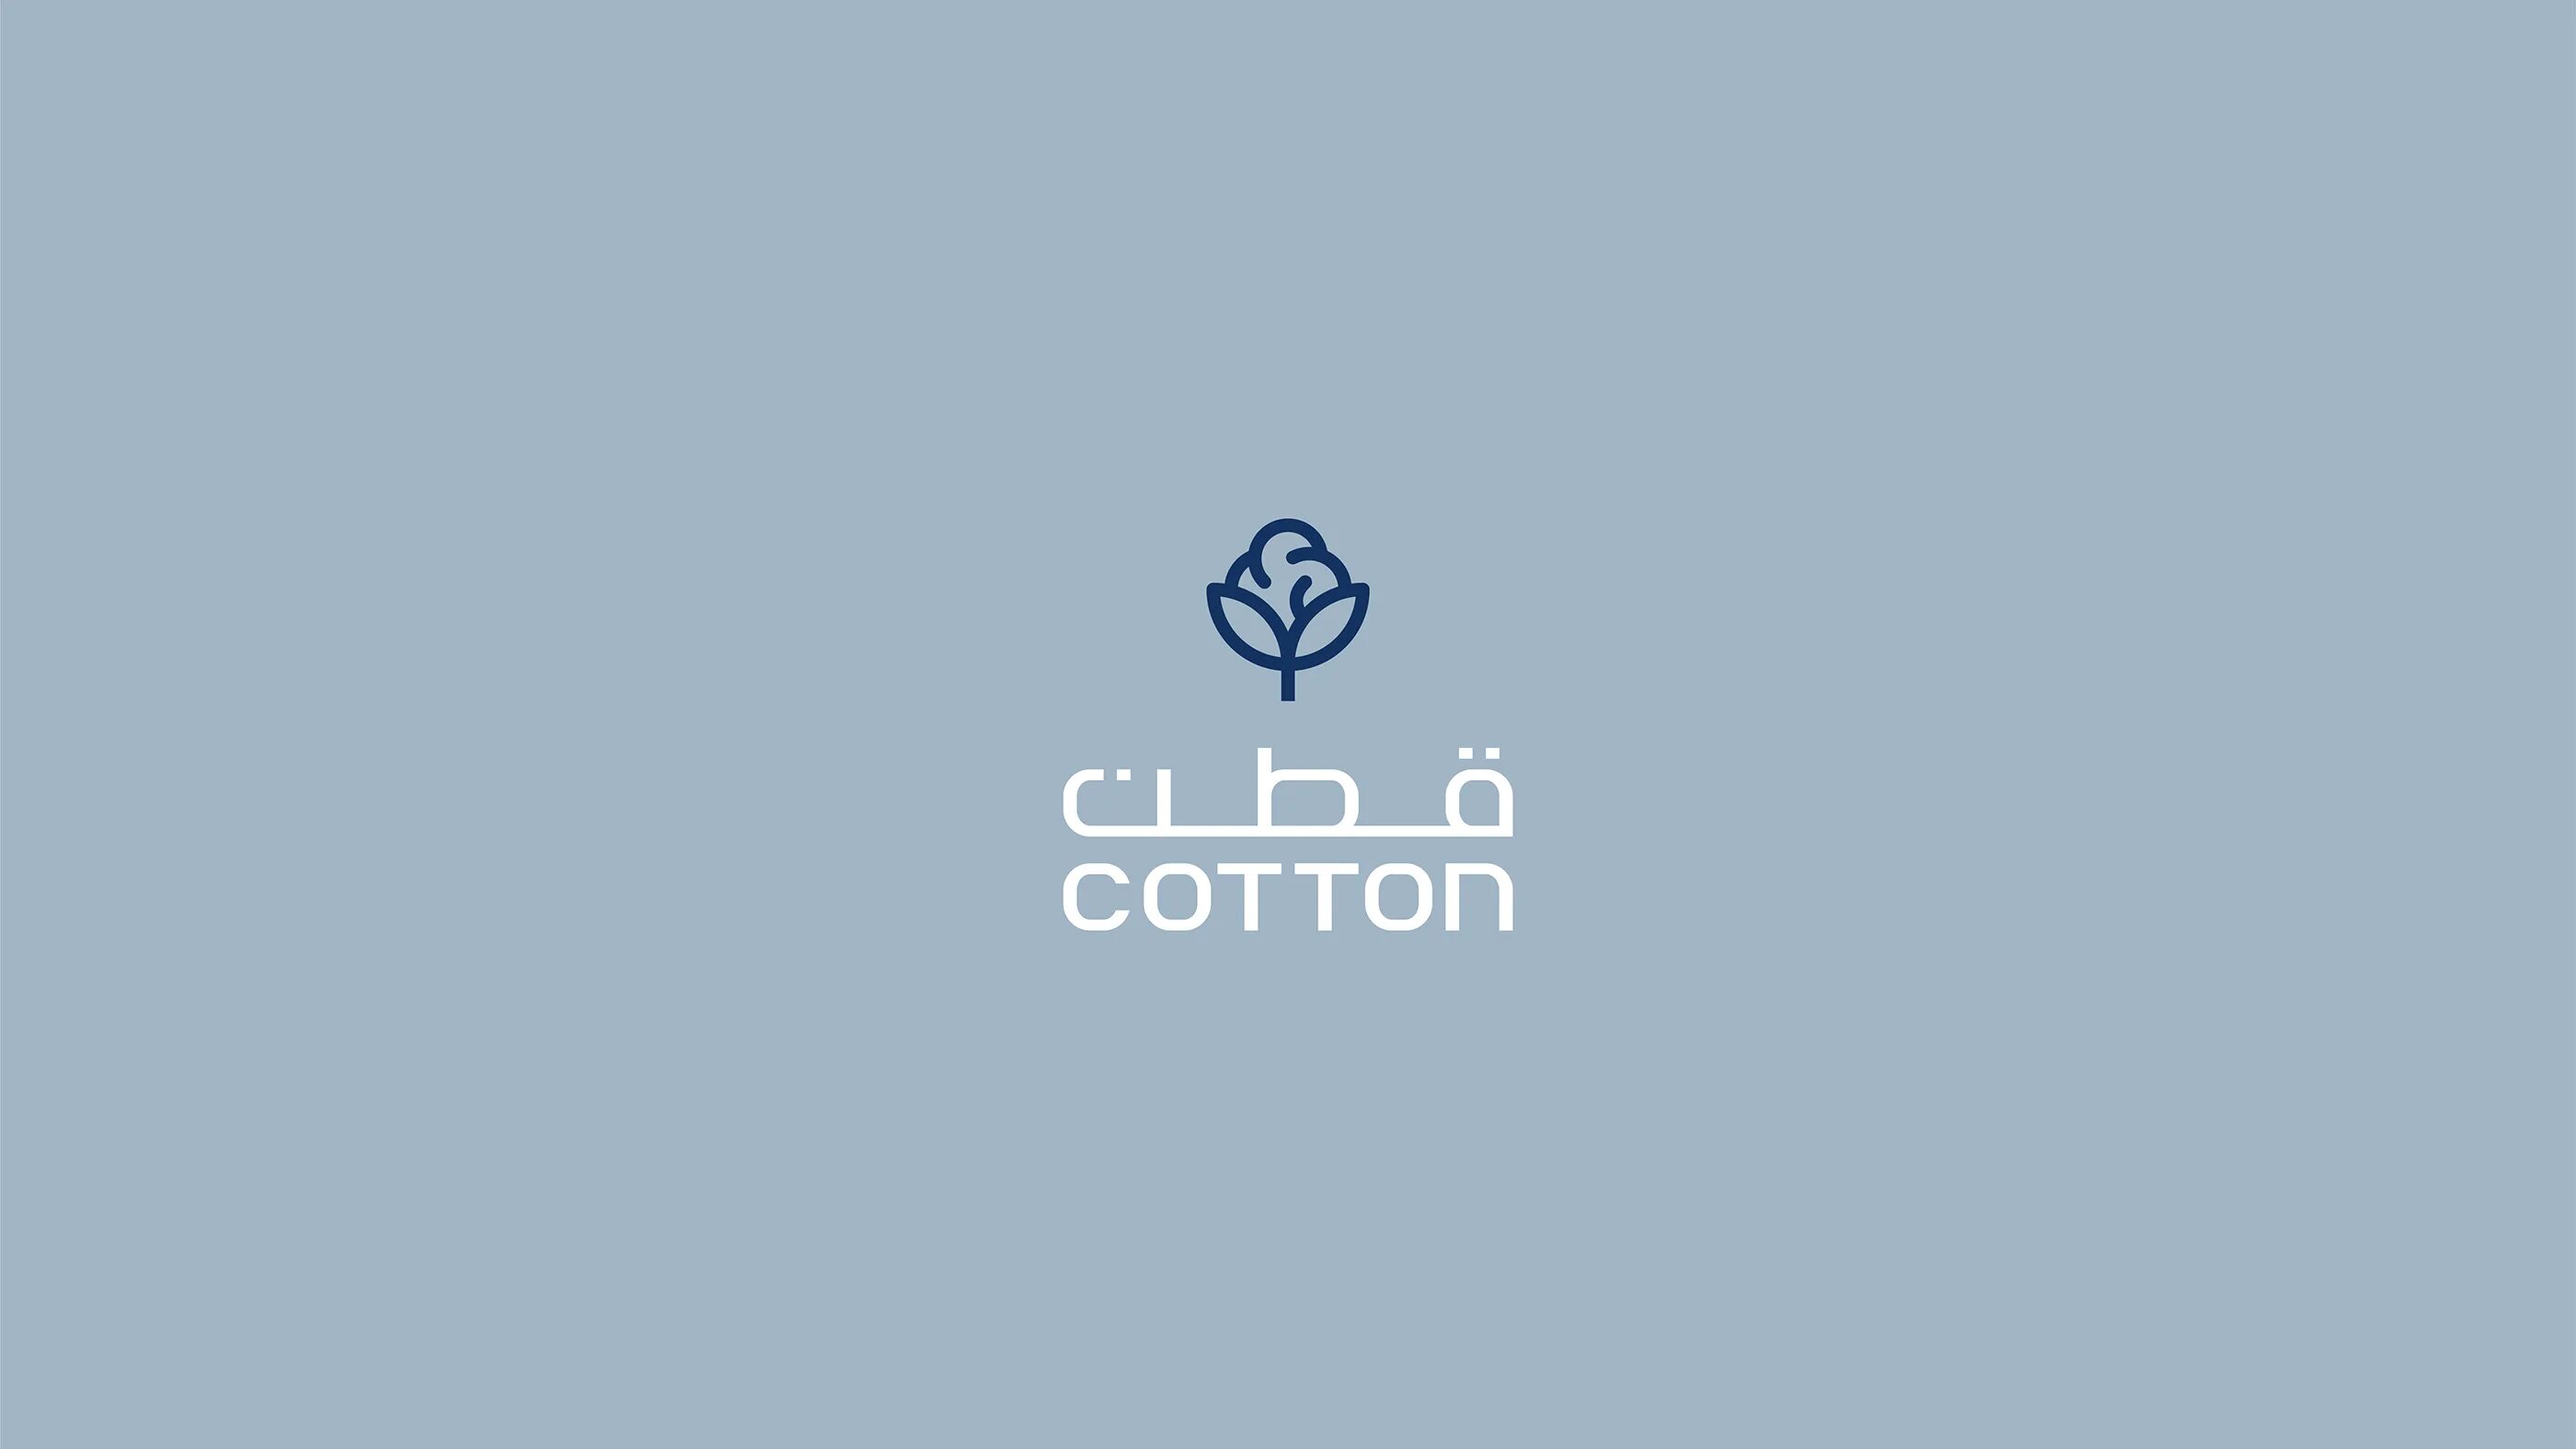 Хлопок логотип. Коттон лого. Rjnjy лого. Cotton logo Design. Логотип хлопок